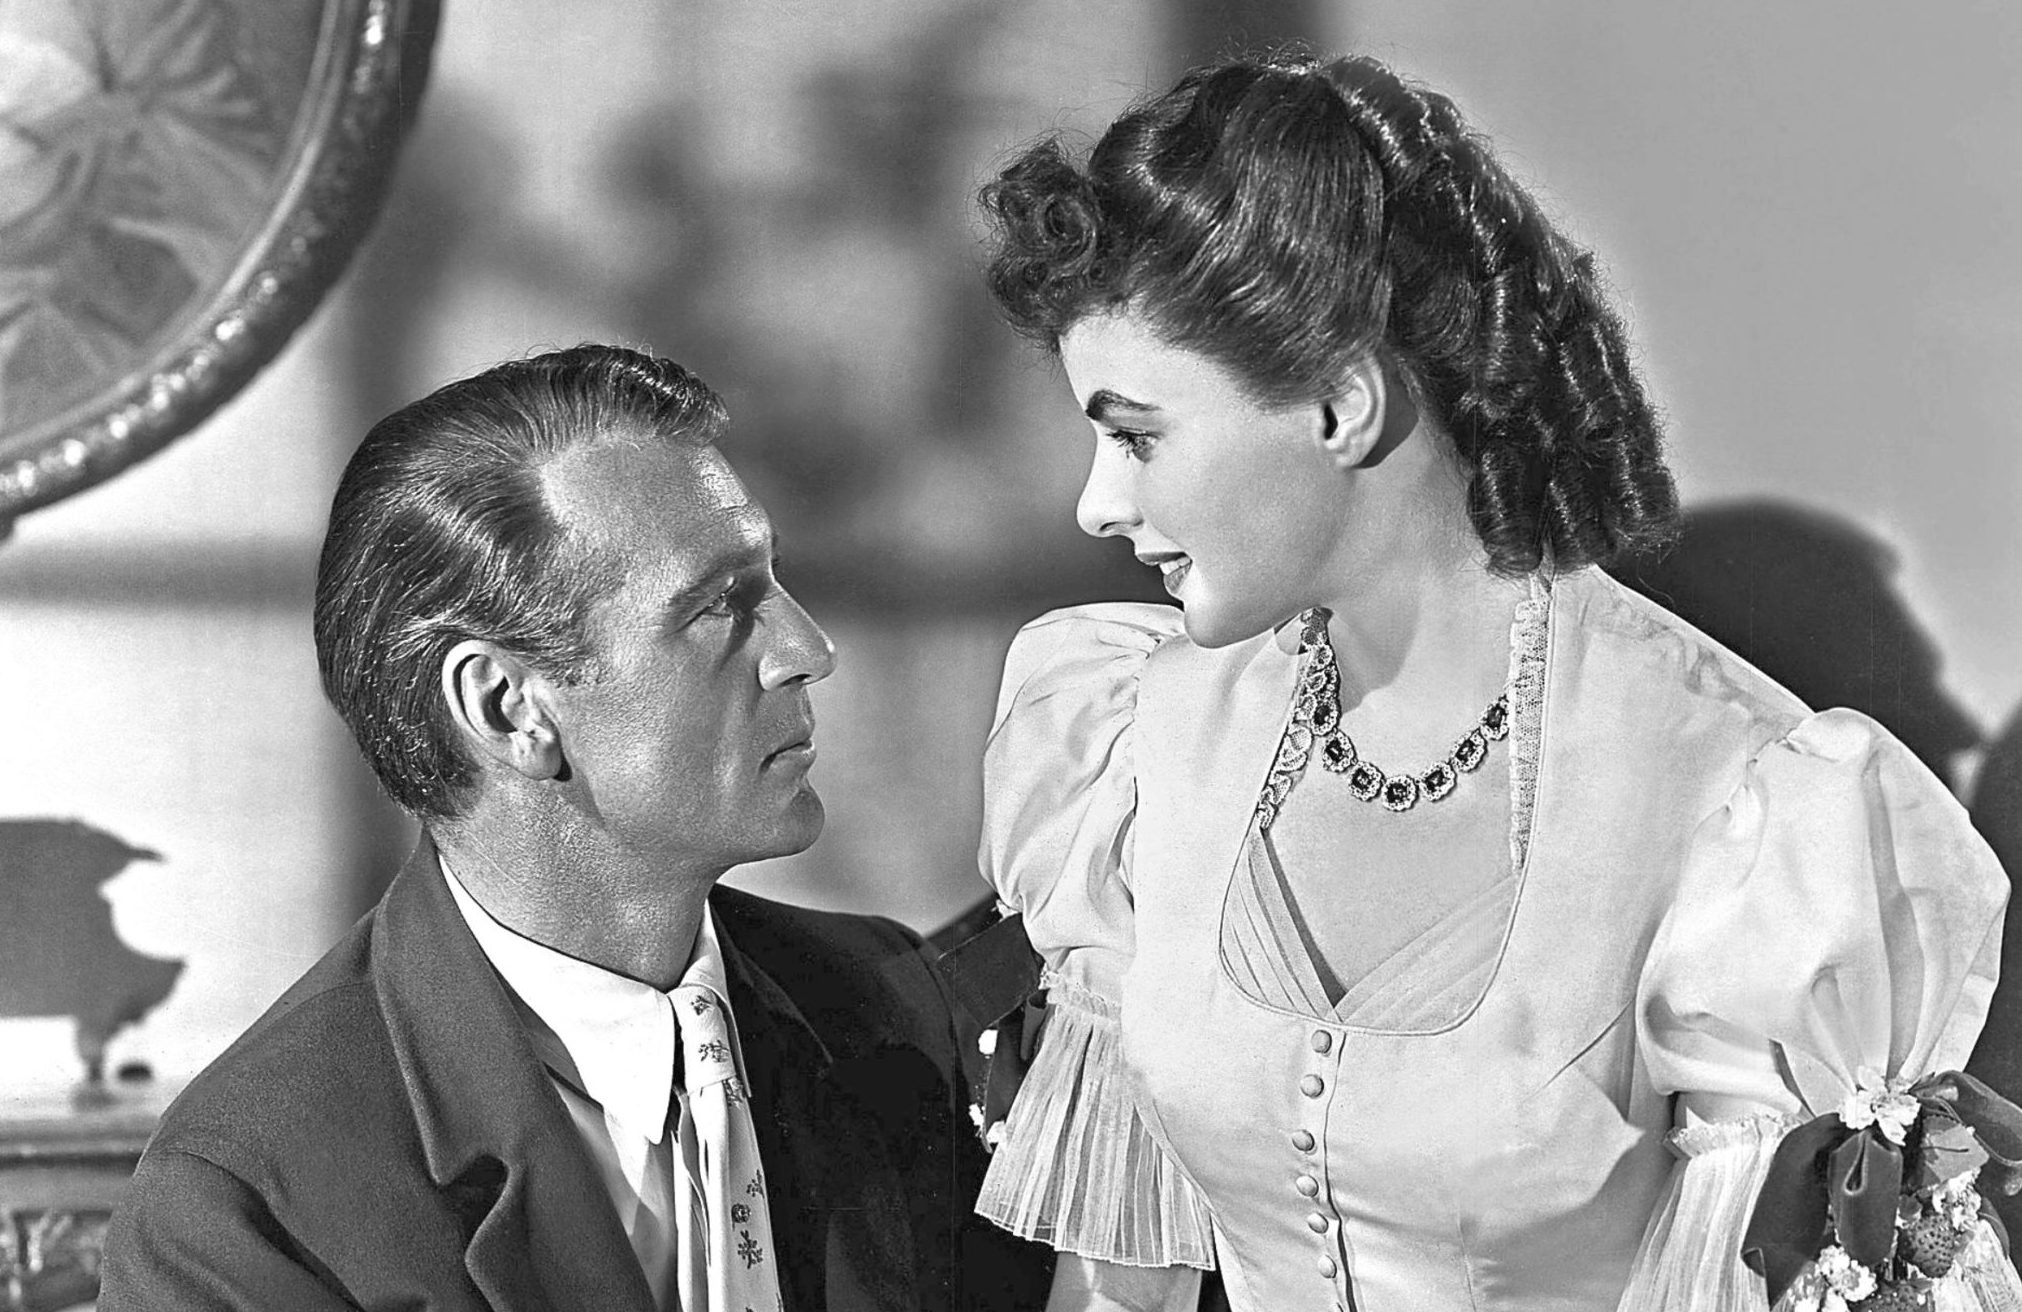 Gary Cooper alongside Ingrid Bergman in Saratoga Trunk